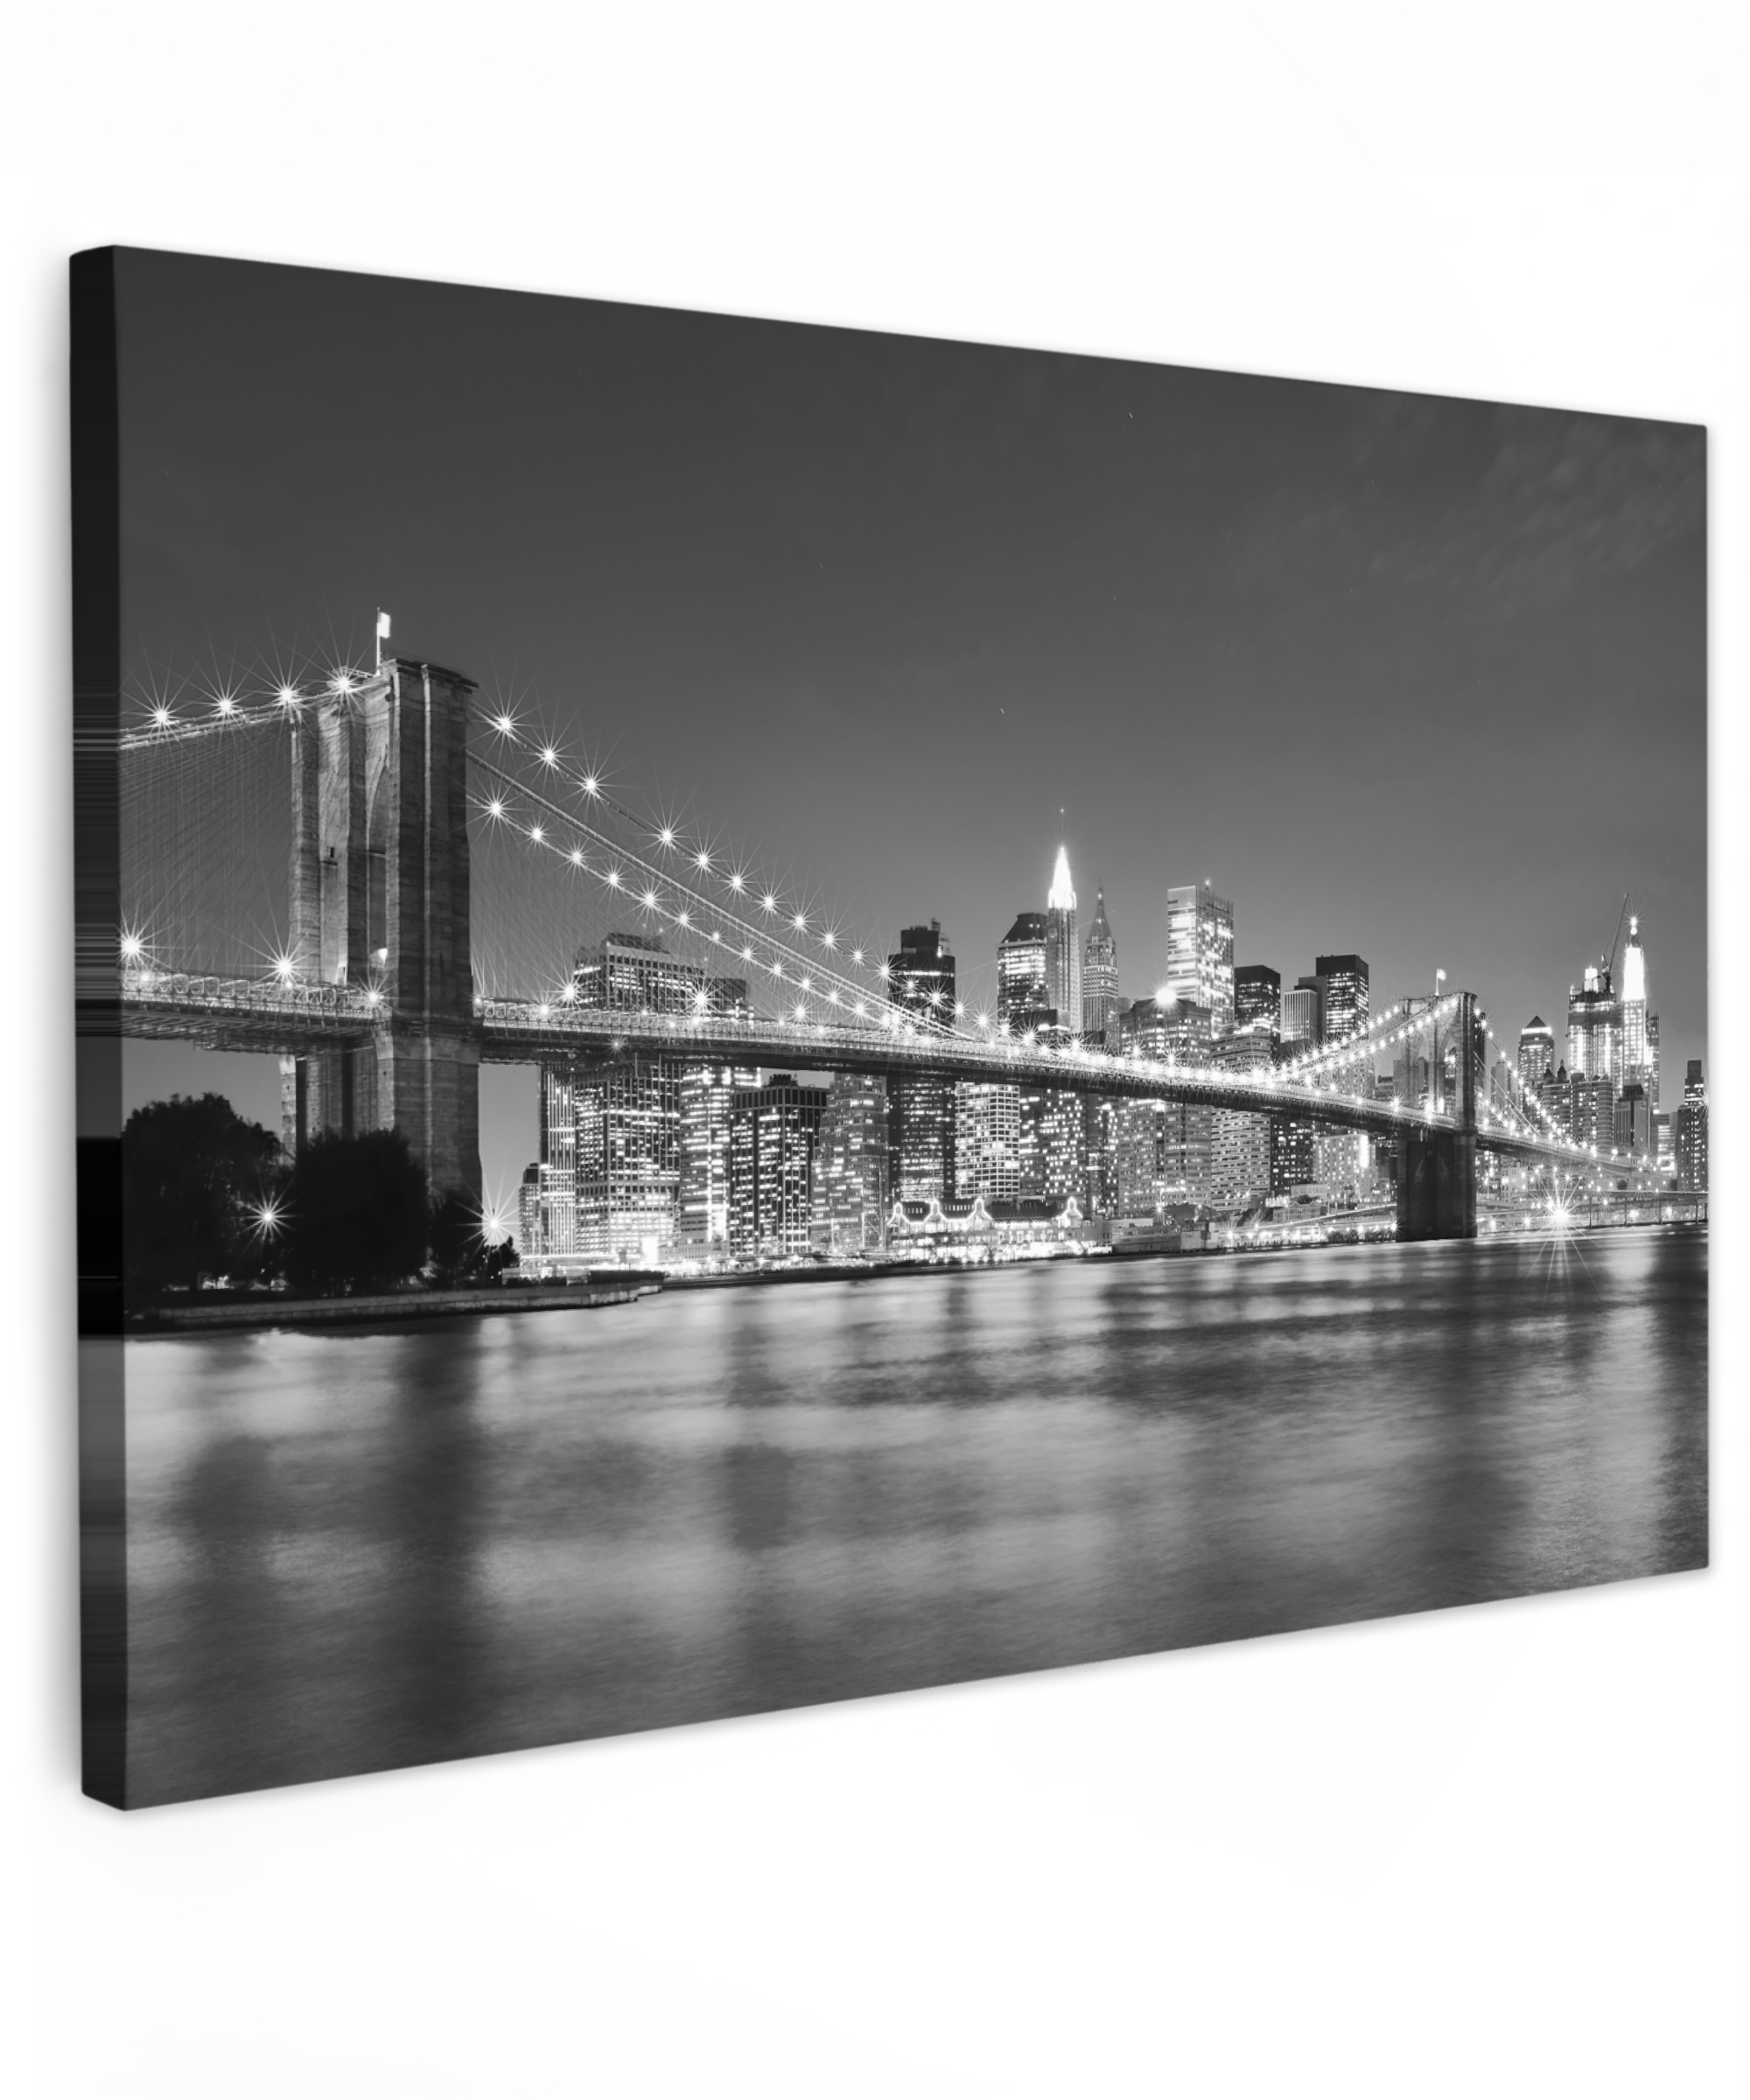 Leinwandbild - New York - Brücke - Brooklyn - Schwarz Weiß - Architektur